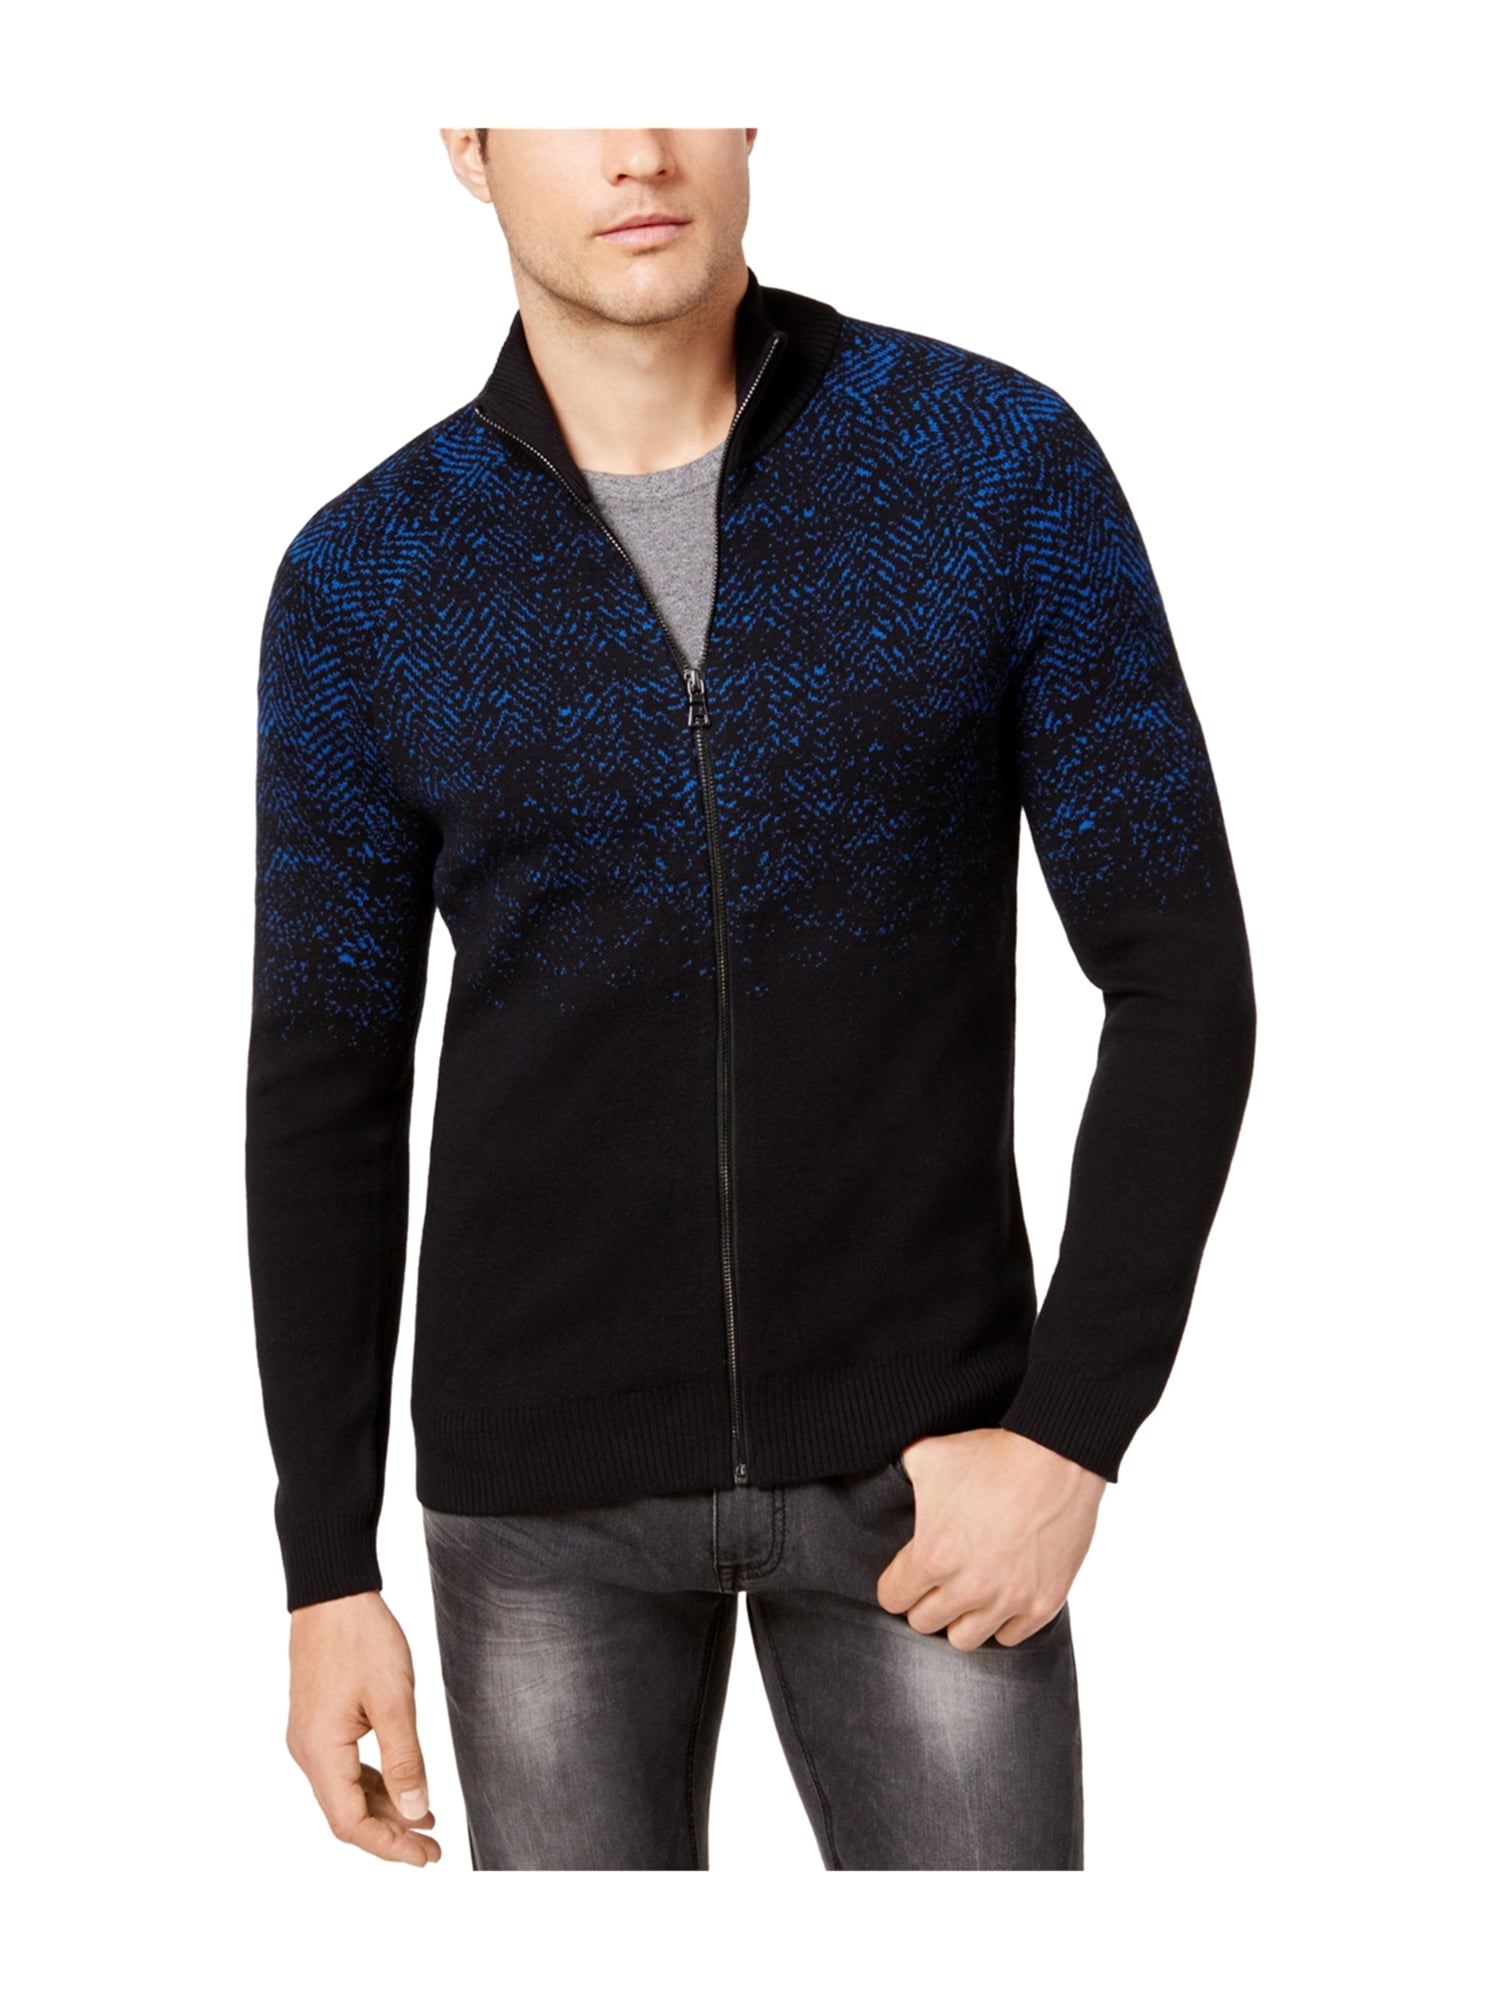 I-N-C Mens Full Zip Cardigan Sweater rivierablue XS | Walmart Canada